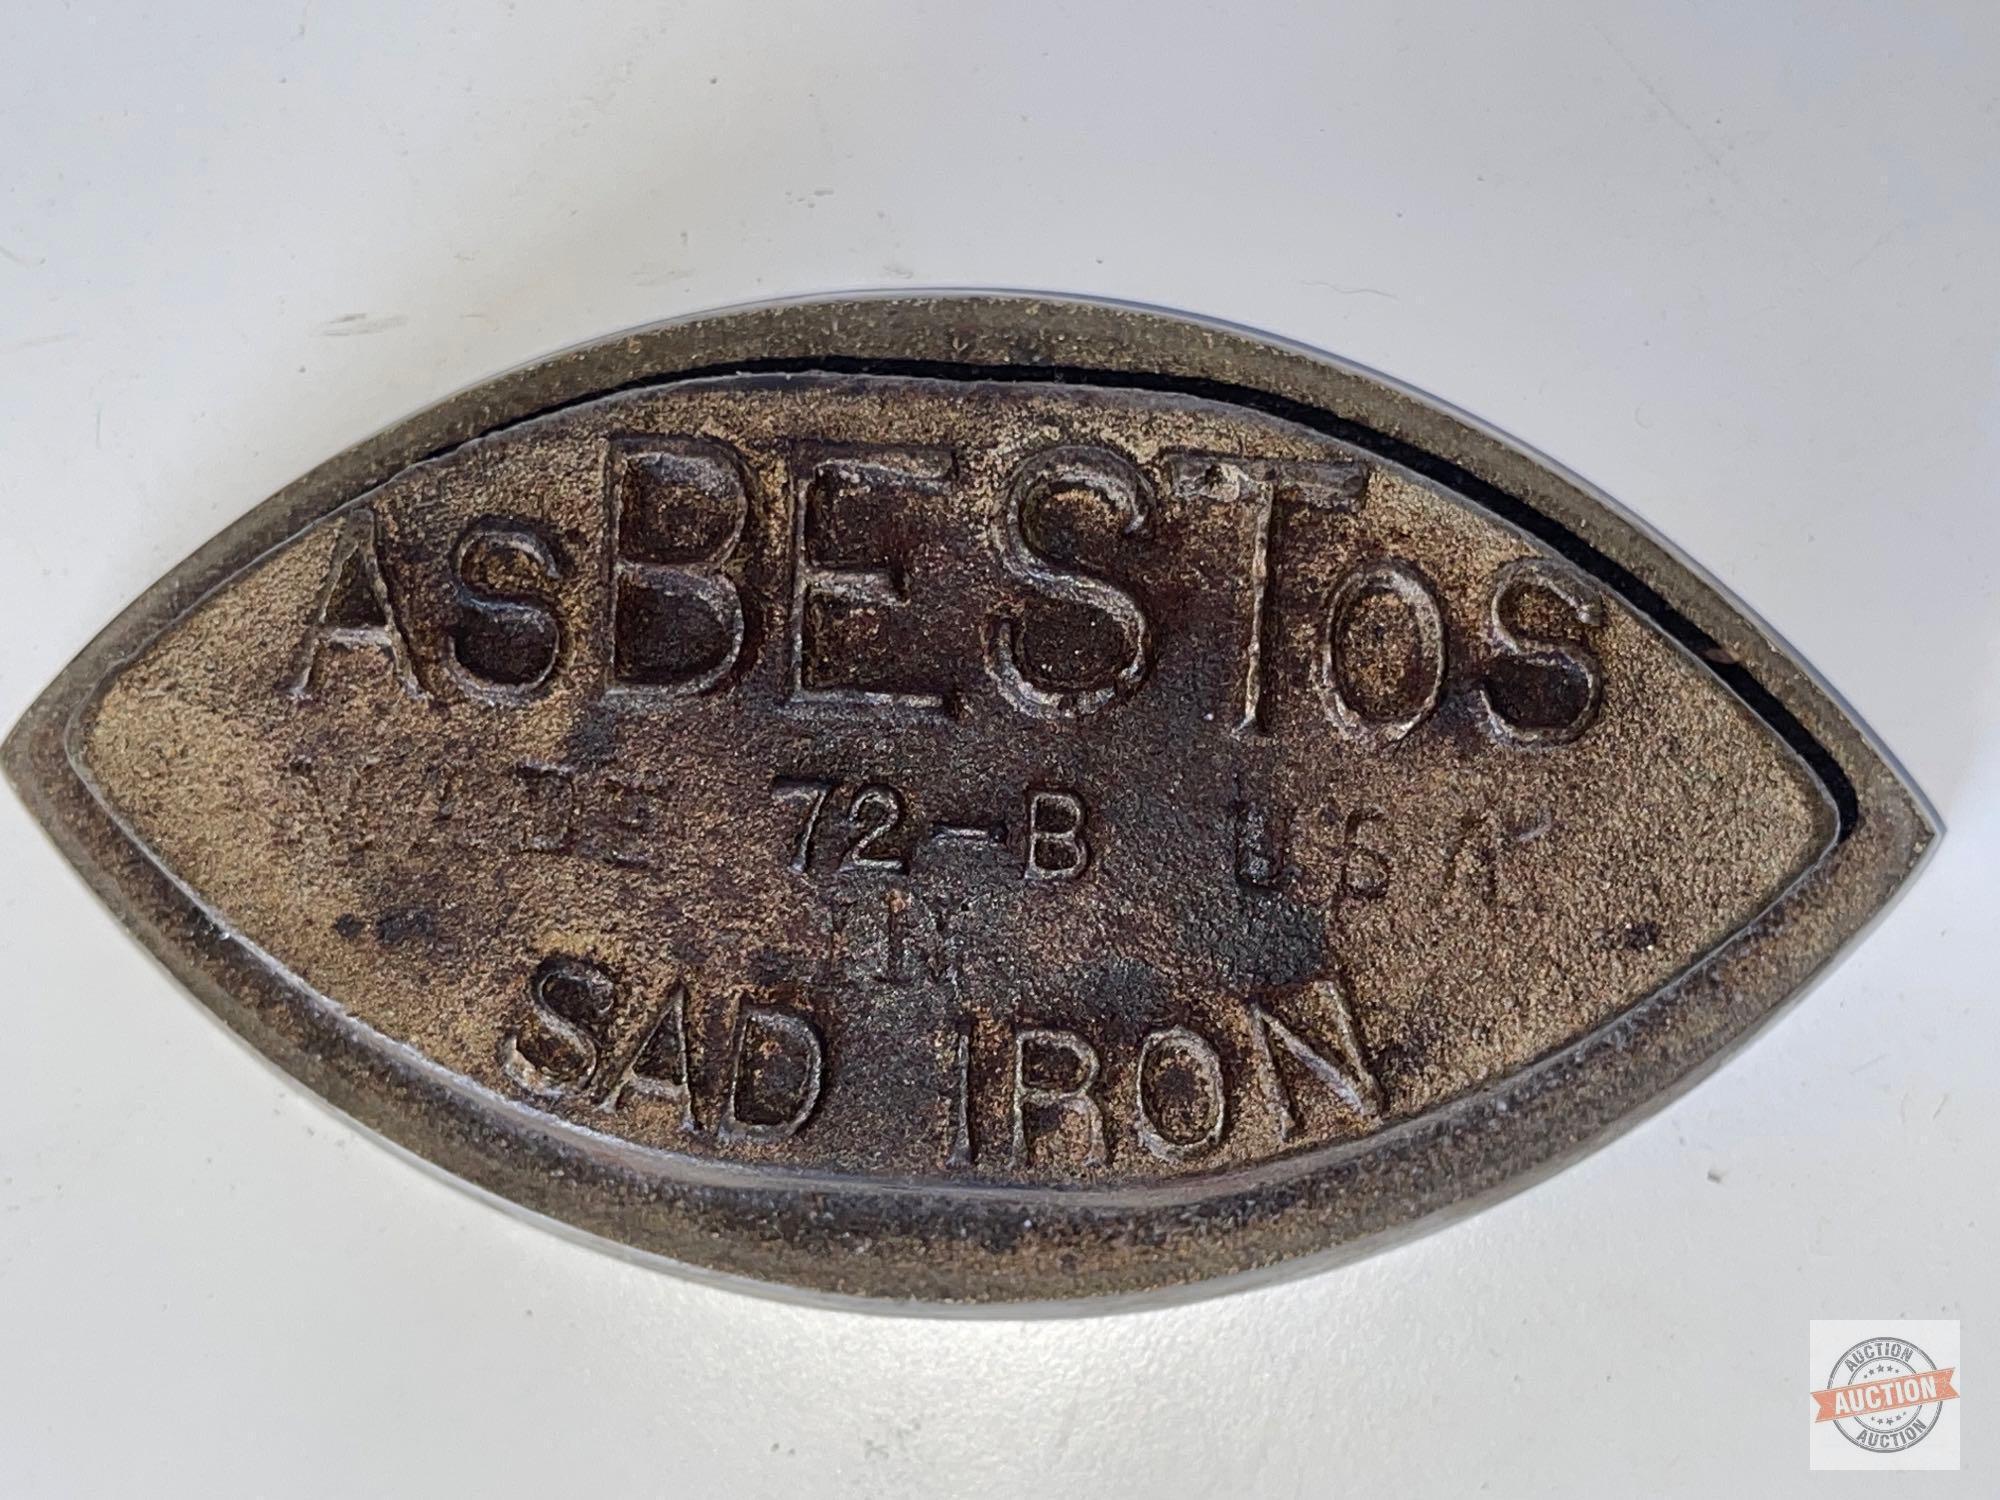 Vintage Sad Iron - AsBESTos Sad Iron 72-B USA